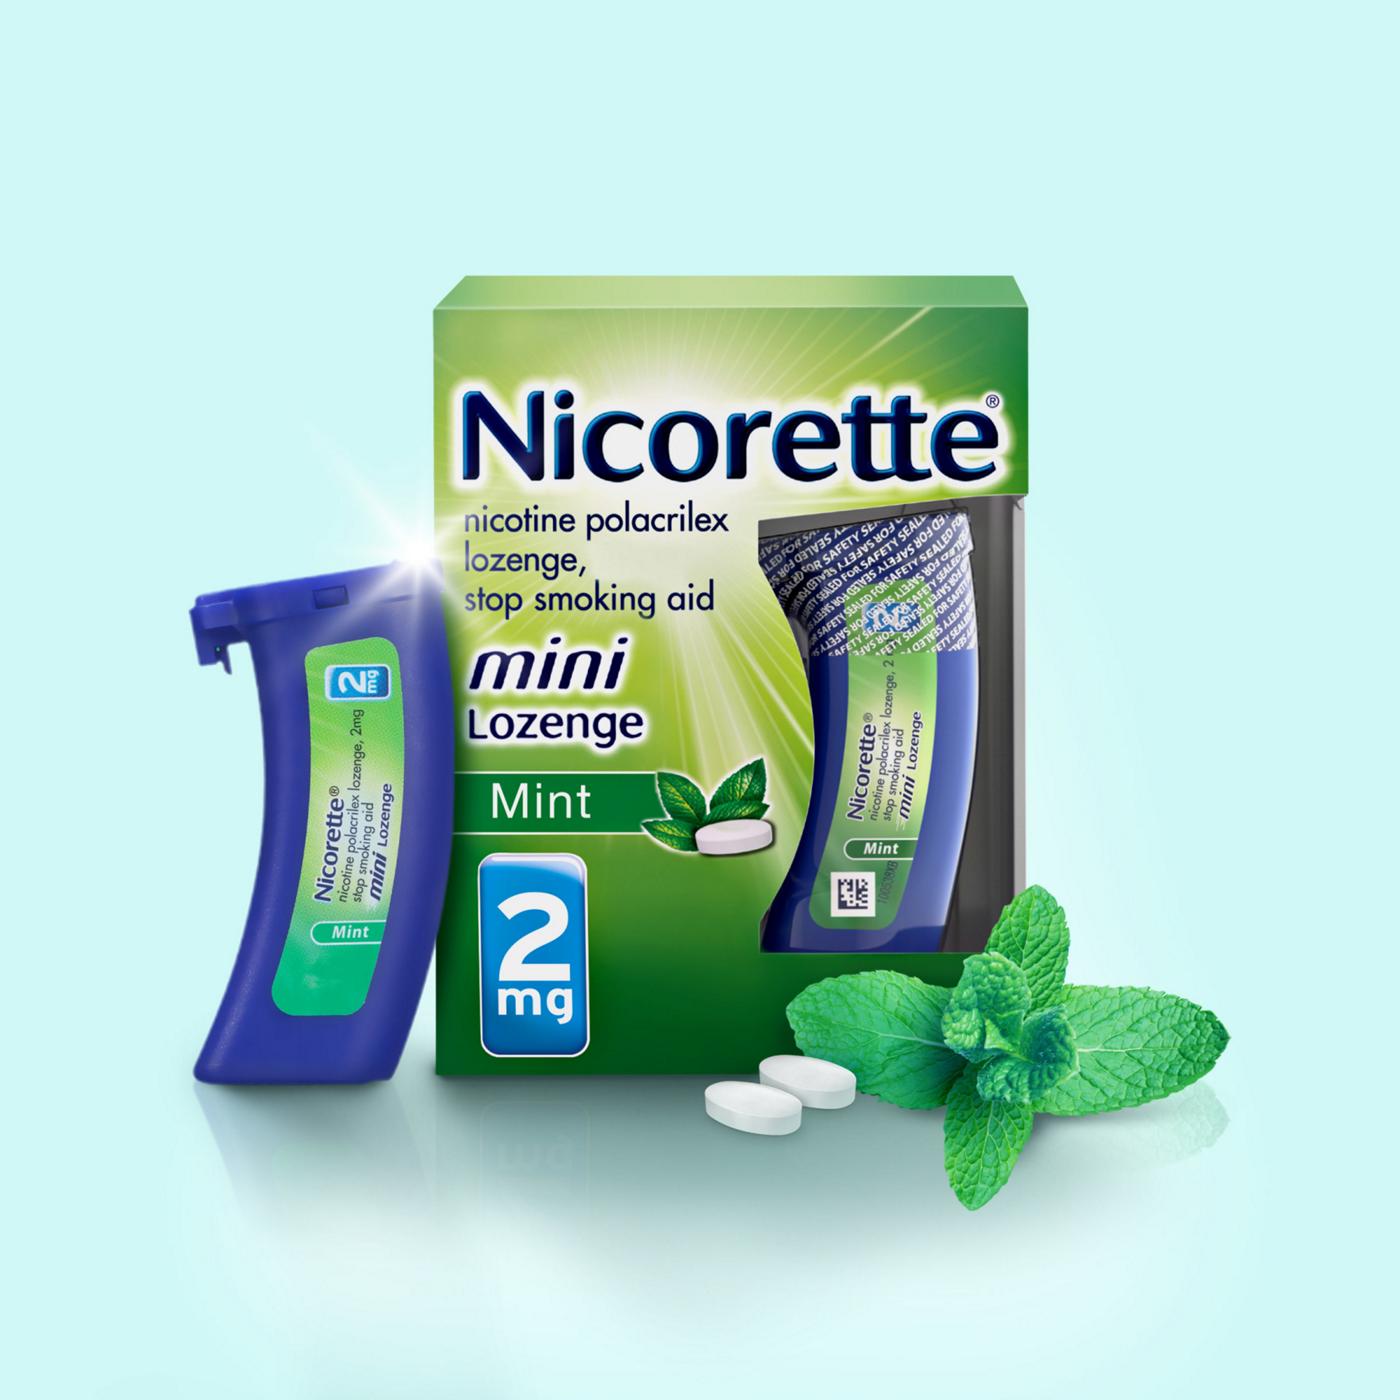 Nicorette Stop Smoking Aid Mini Lozenges - 2 mg; image 4 of 8